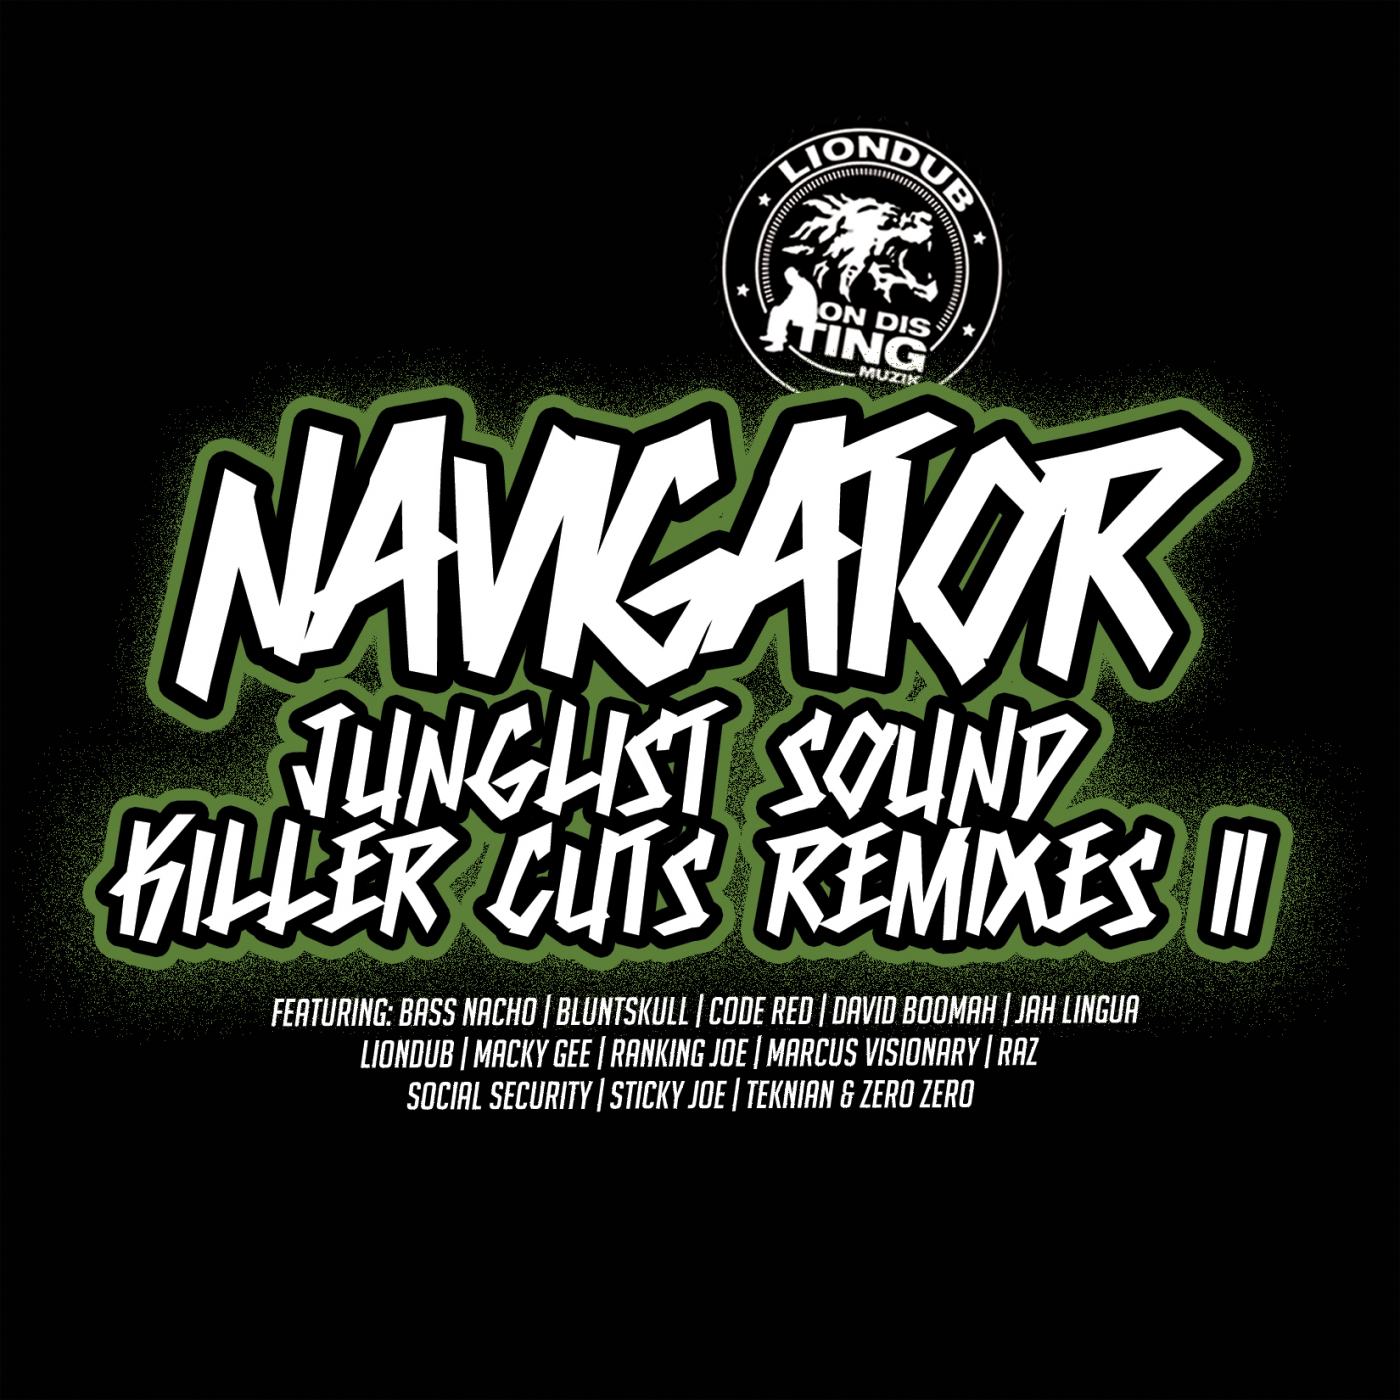 Junglist Sound (Sticky Joe Roots Remix)